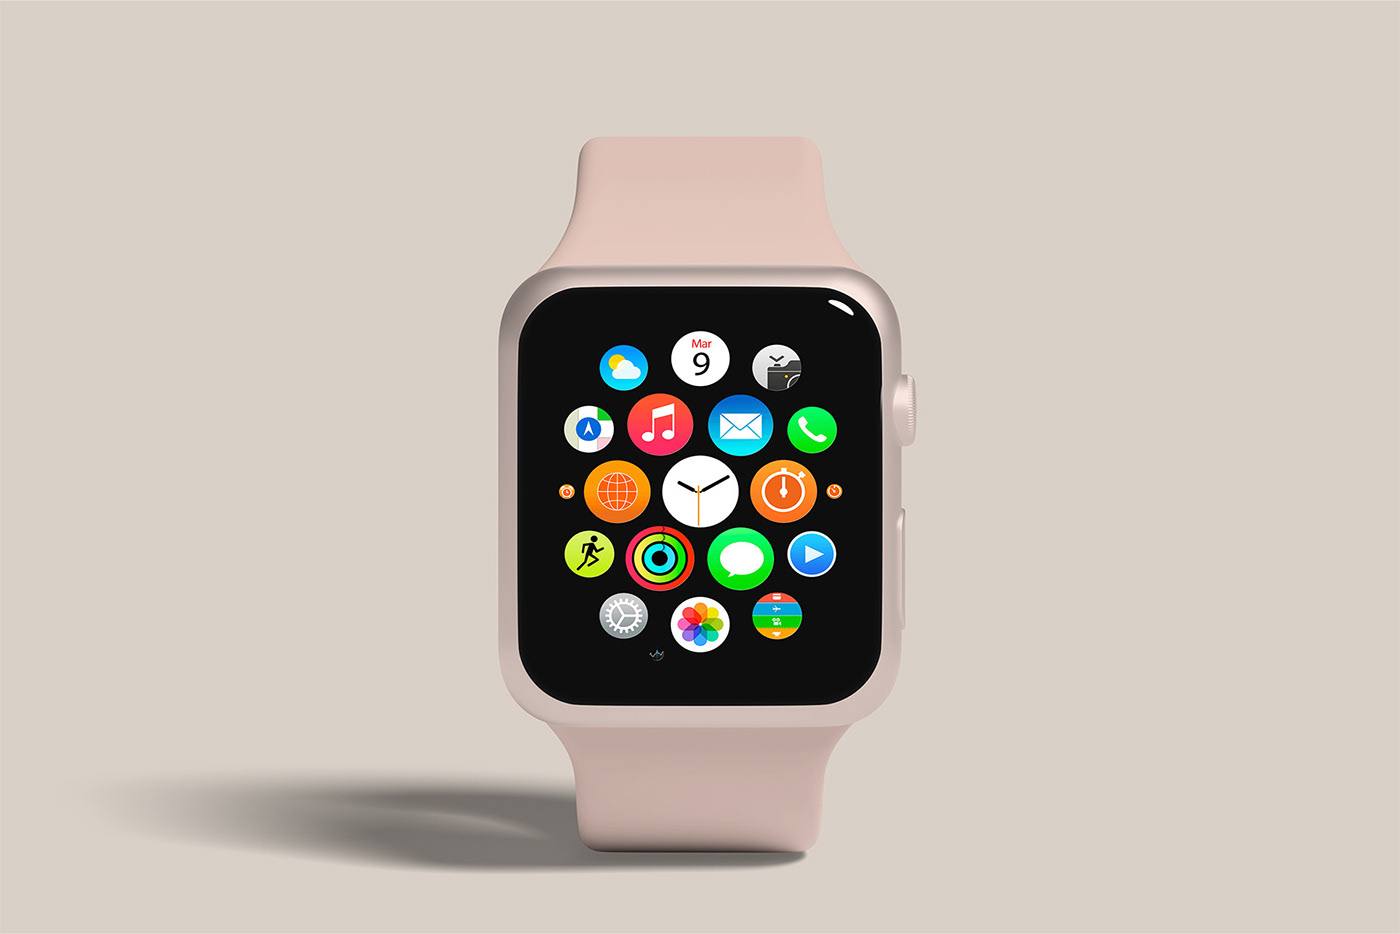 Mockup mockup design mockup psd mockup free watch watch design smartwatch product design  Advertising  marketing  